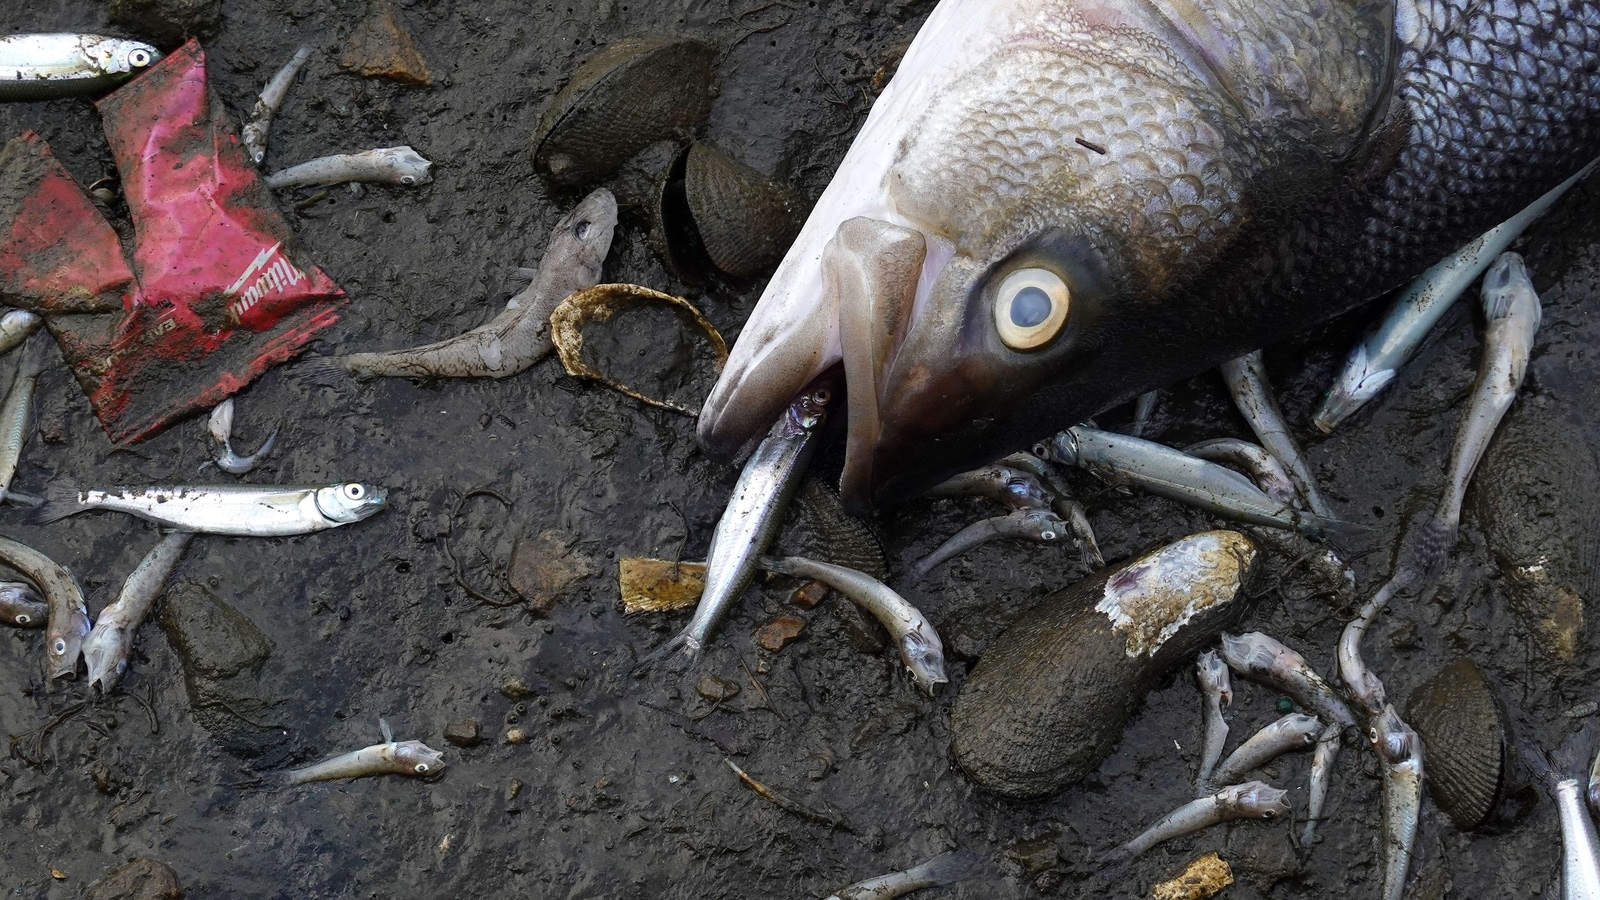 Toxic tide due to algae bloom kills fish, marine life in Francisco Bay - Times